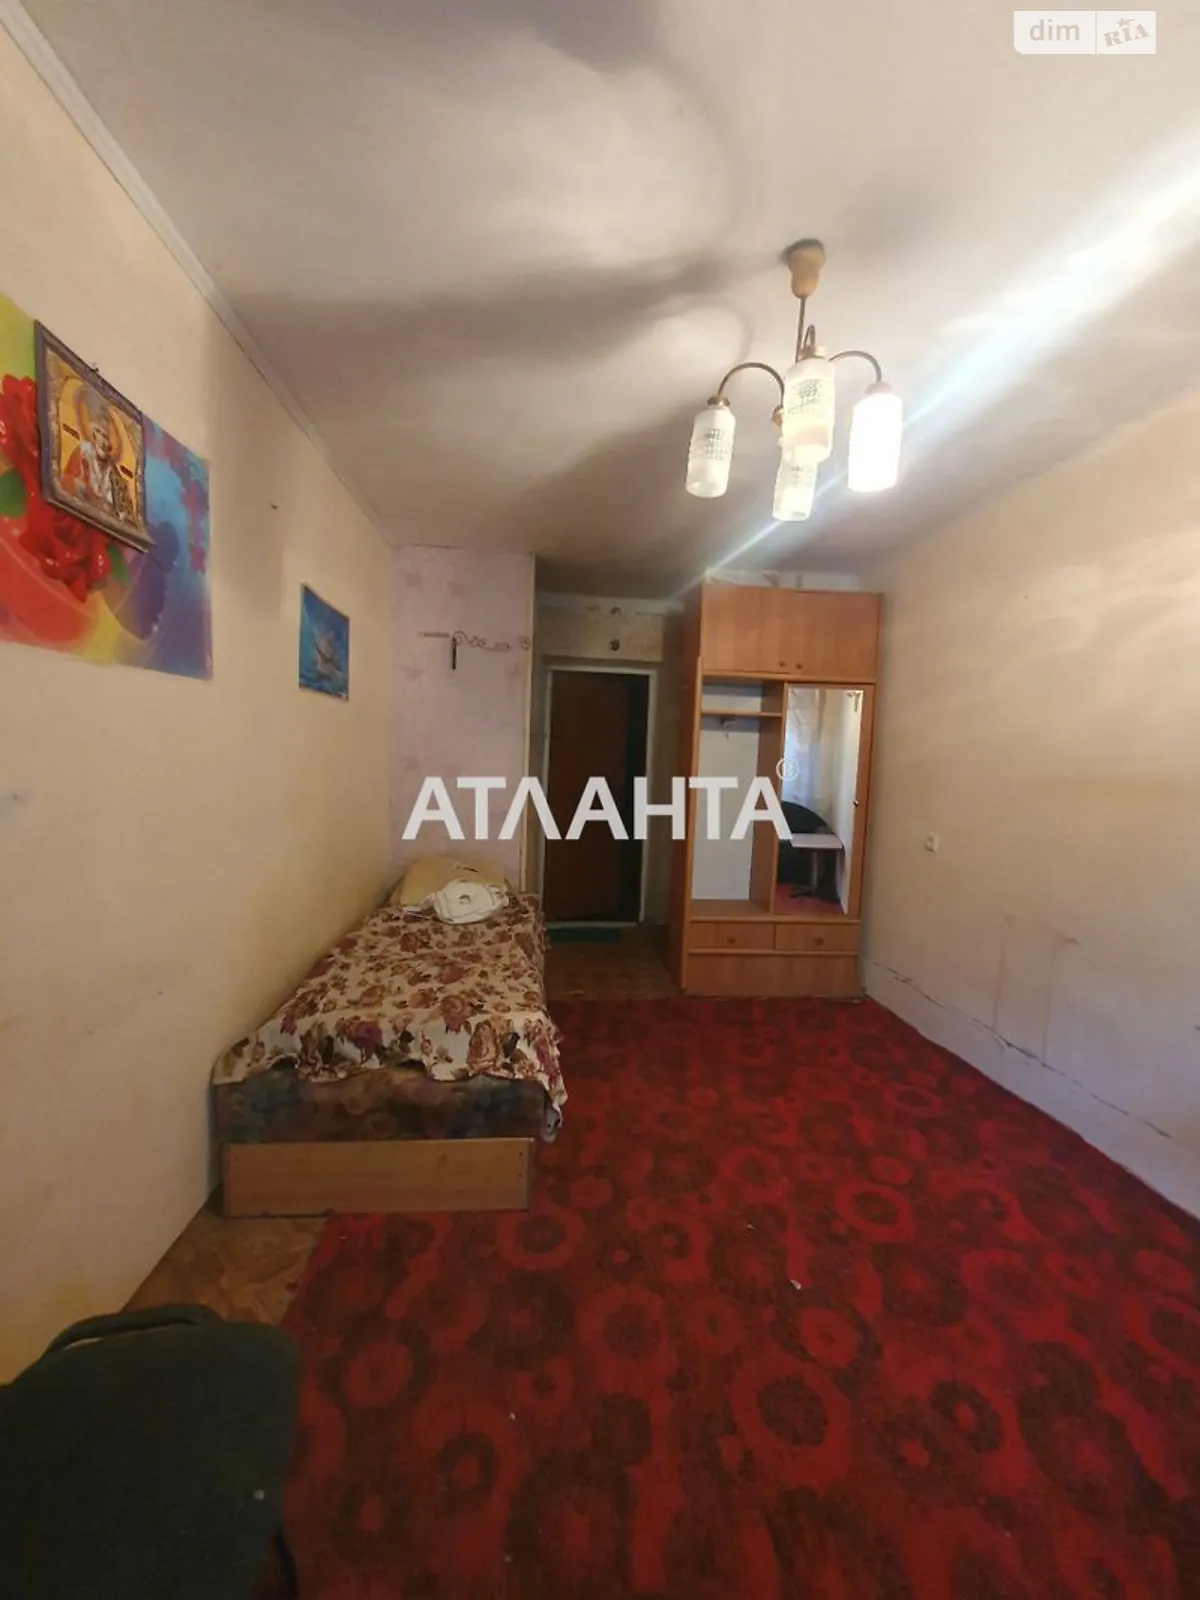 Продается комната 25 кв. м в Одессе, цена: 6500 $ - фото 1